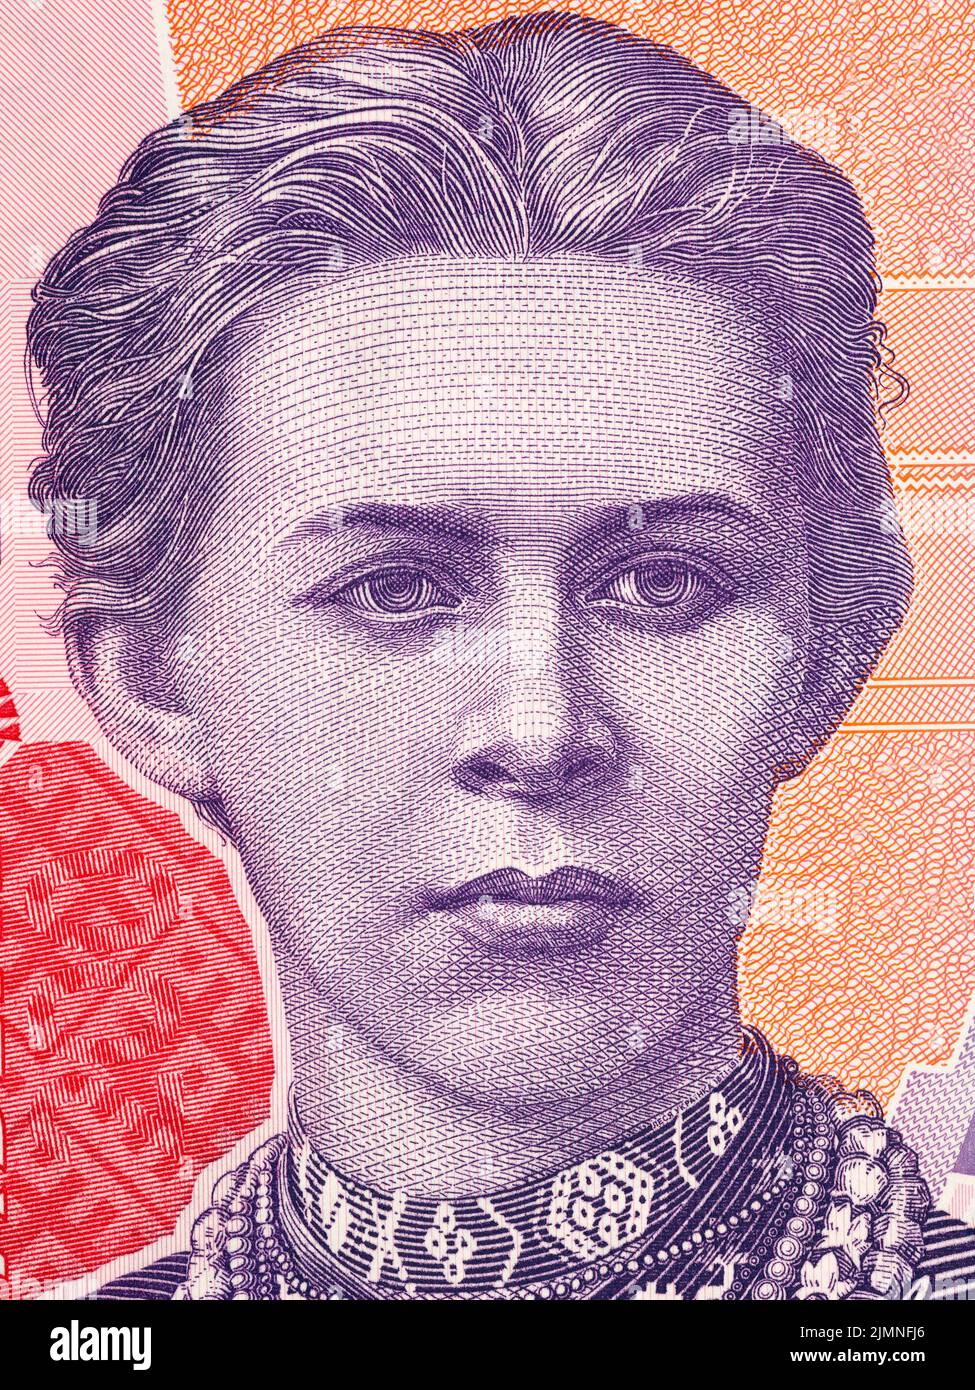 Lesya Ukrainka portrait from Ukrainian money - Hryvnia Stock Photo